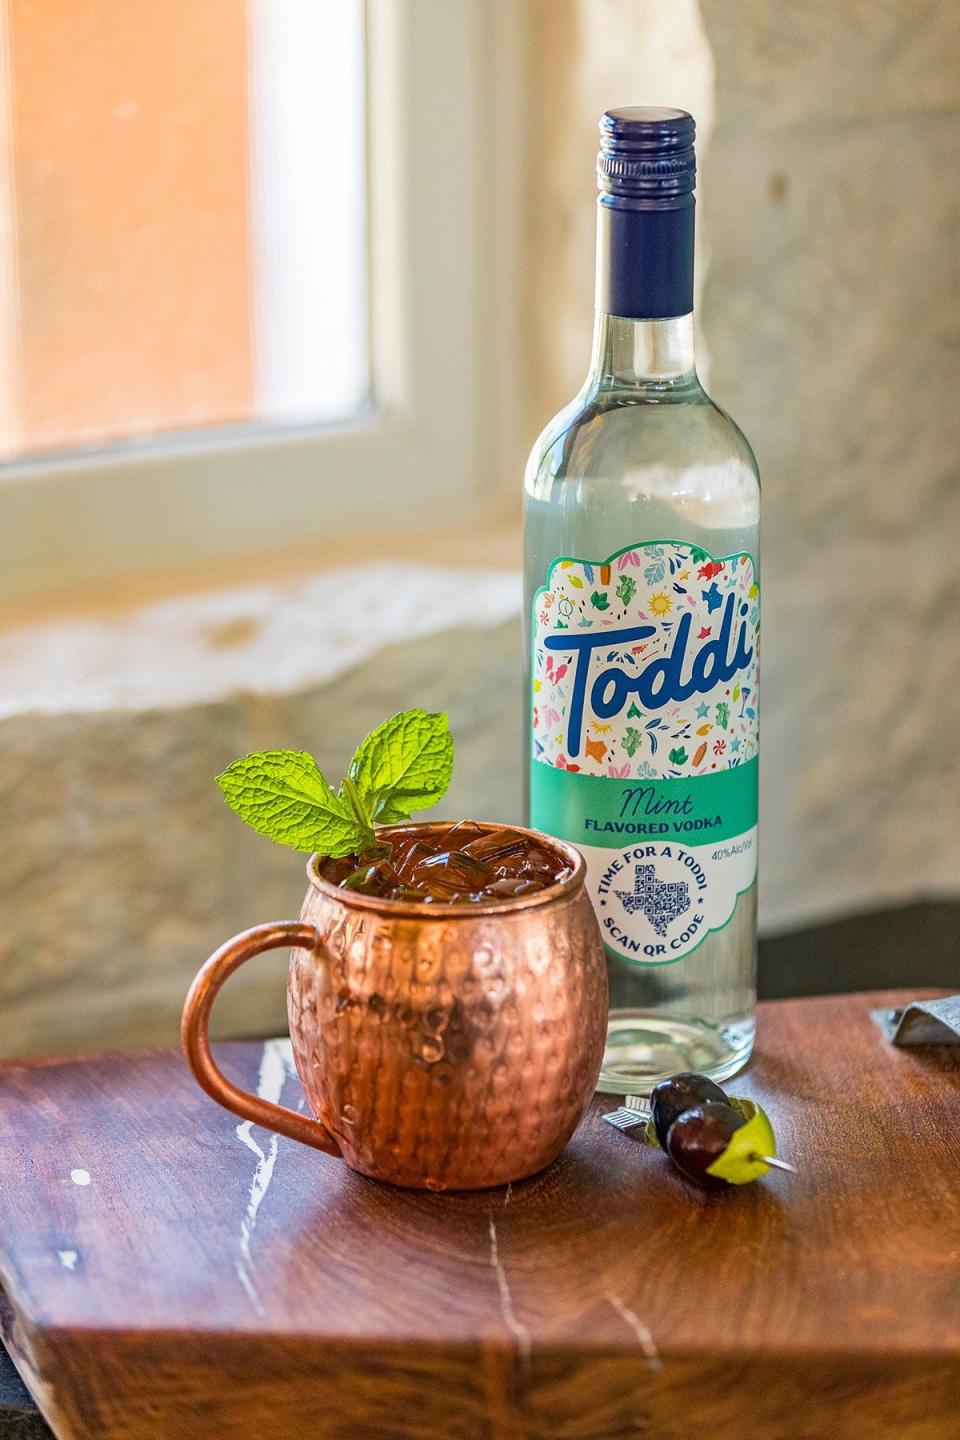 Toddi Vodka offers several flavored vodkas, including mint and vanilla cream.